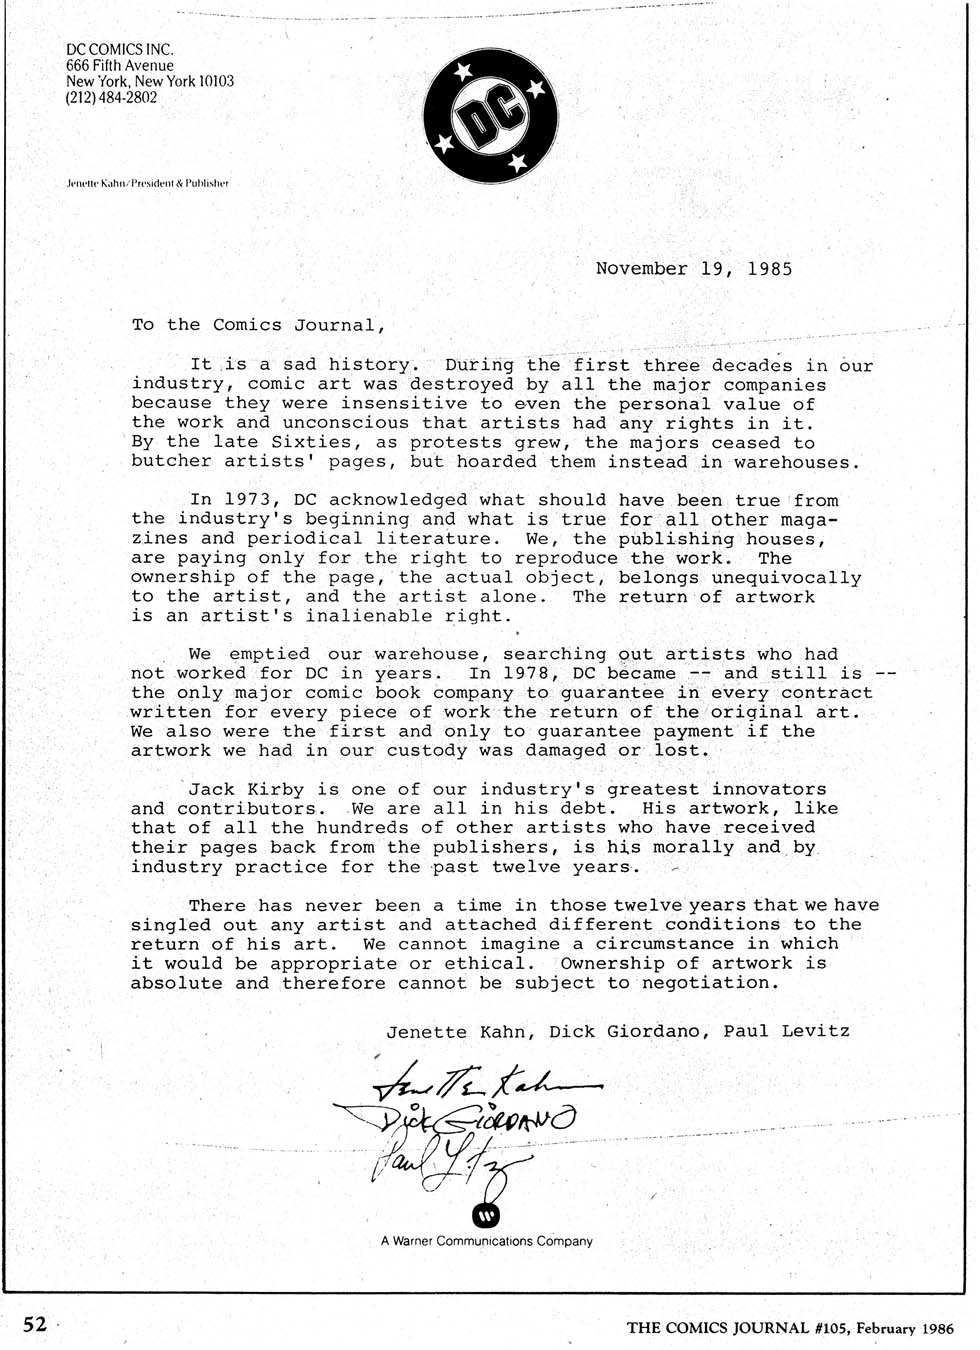 DC Letter to the Comics Journal regarding Jack Kirby's art return, printed in TCJ 105